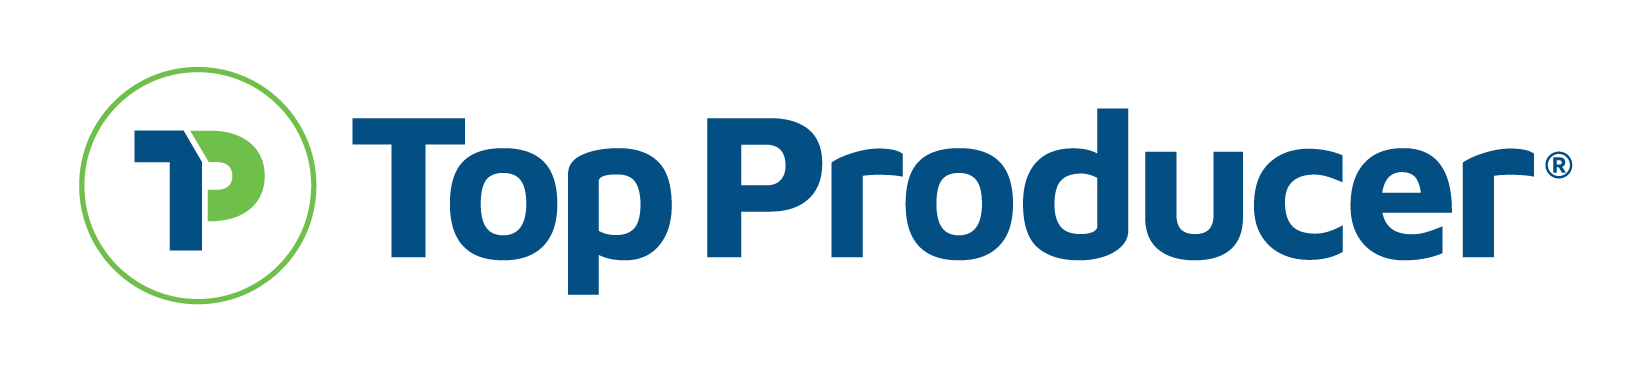 Top Producer logo